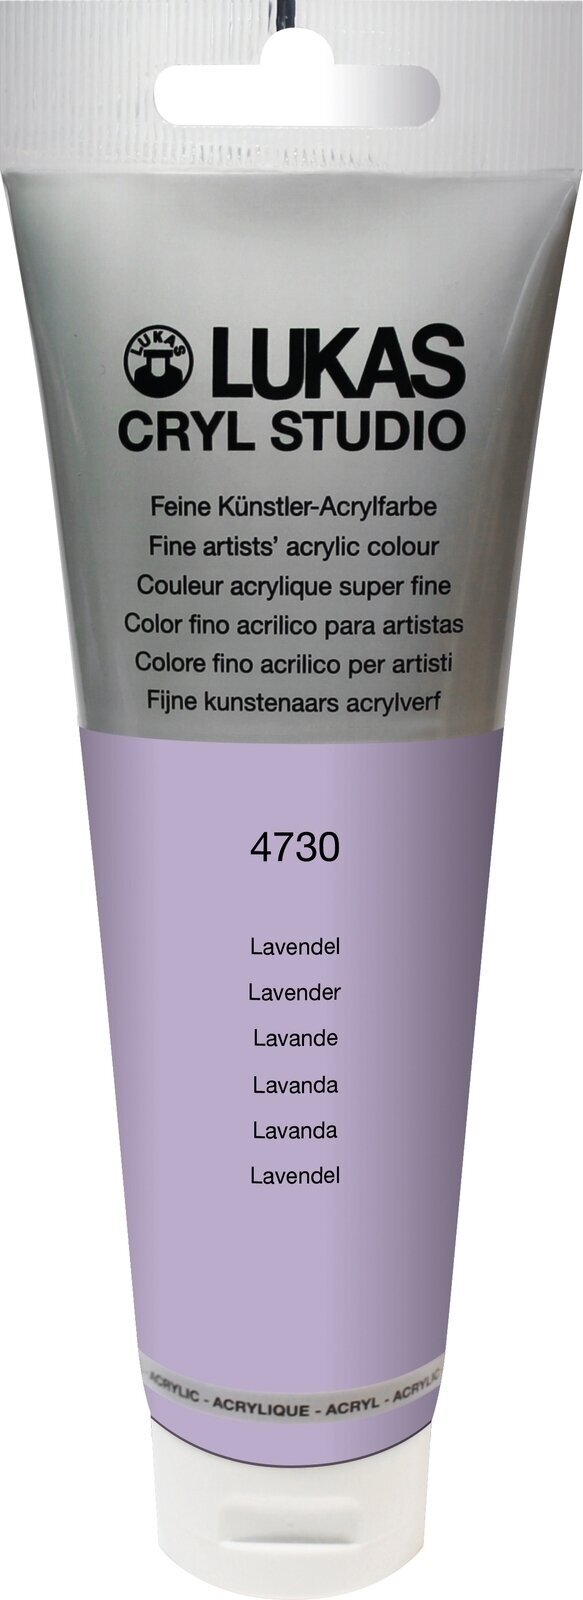 Aκρυλικό Χρώμα Lukas Cryl Studio Acrylic Paint 125 ml Lavender